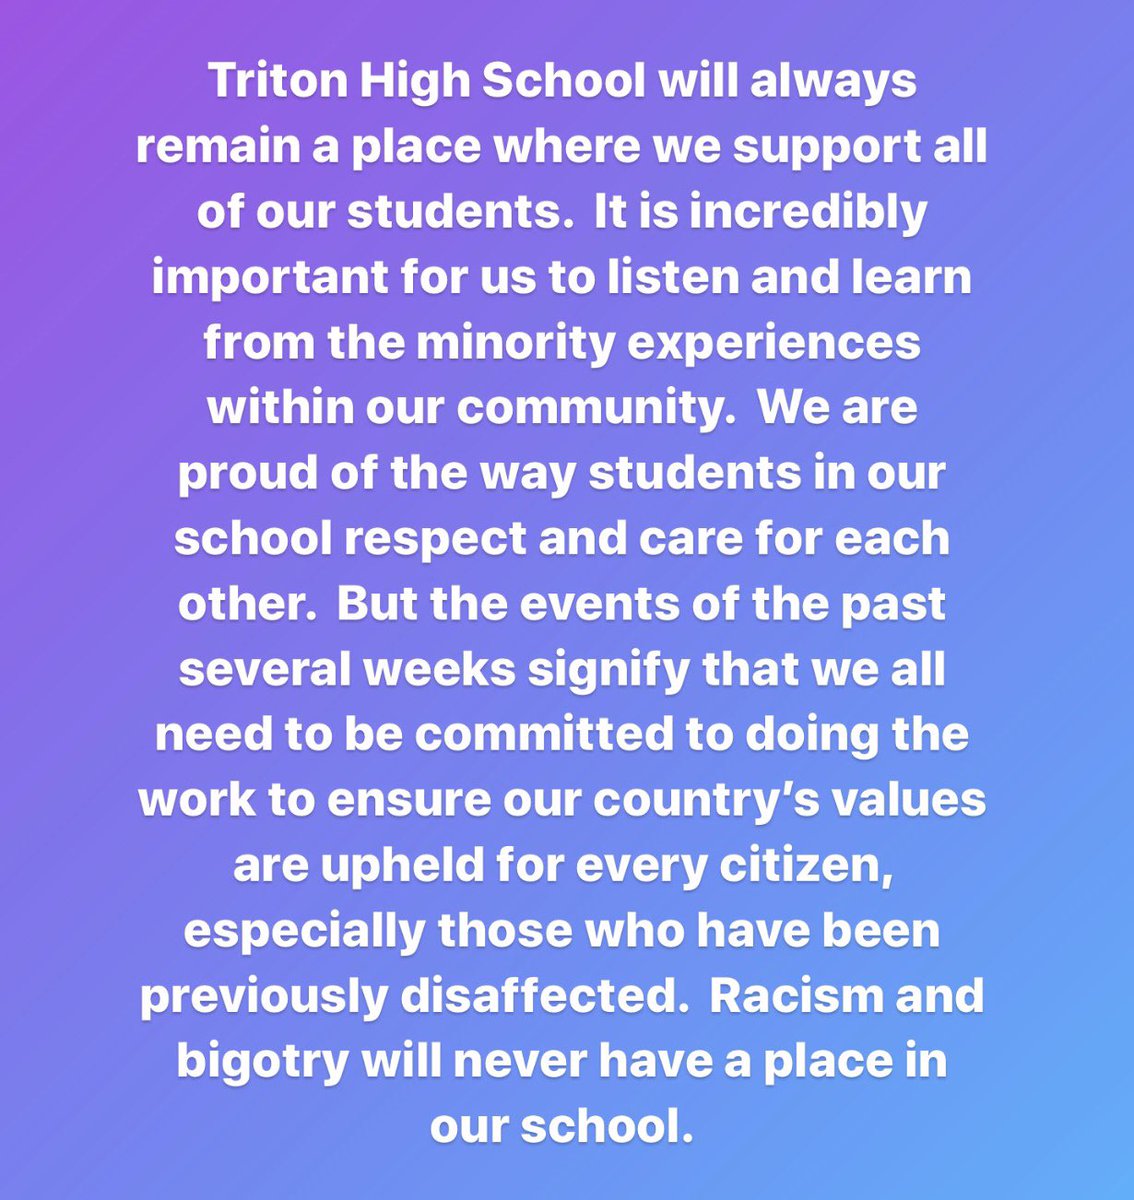 Triton High School (@TritonHighSchl) on Twitter photo 2020-06-03 16:54:48